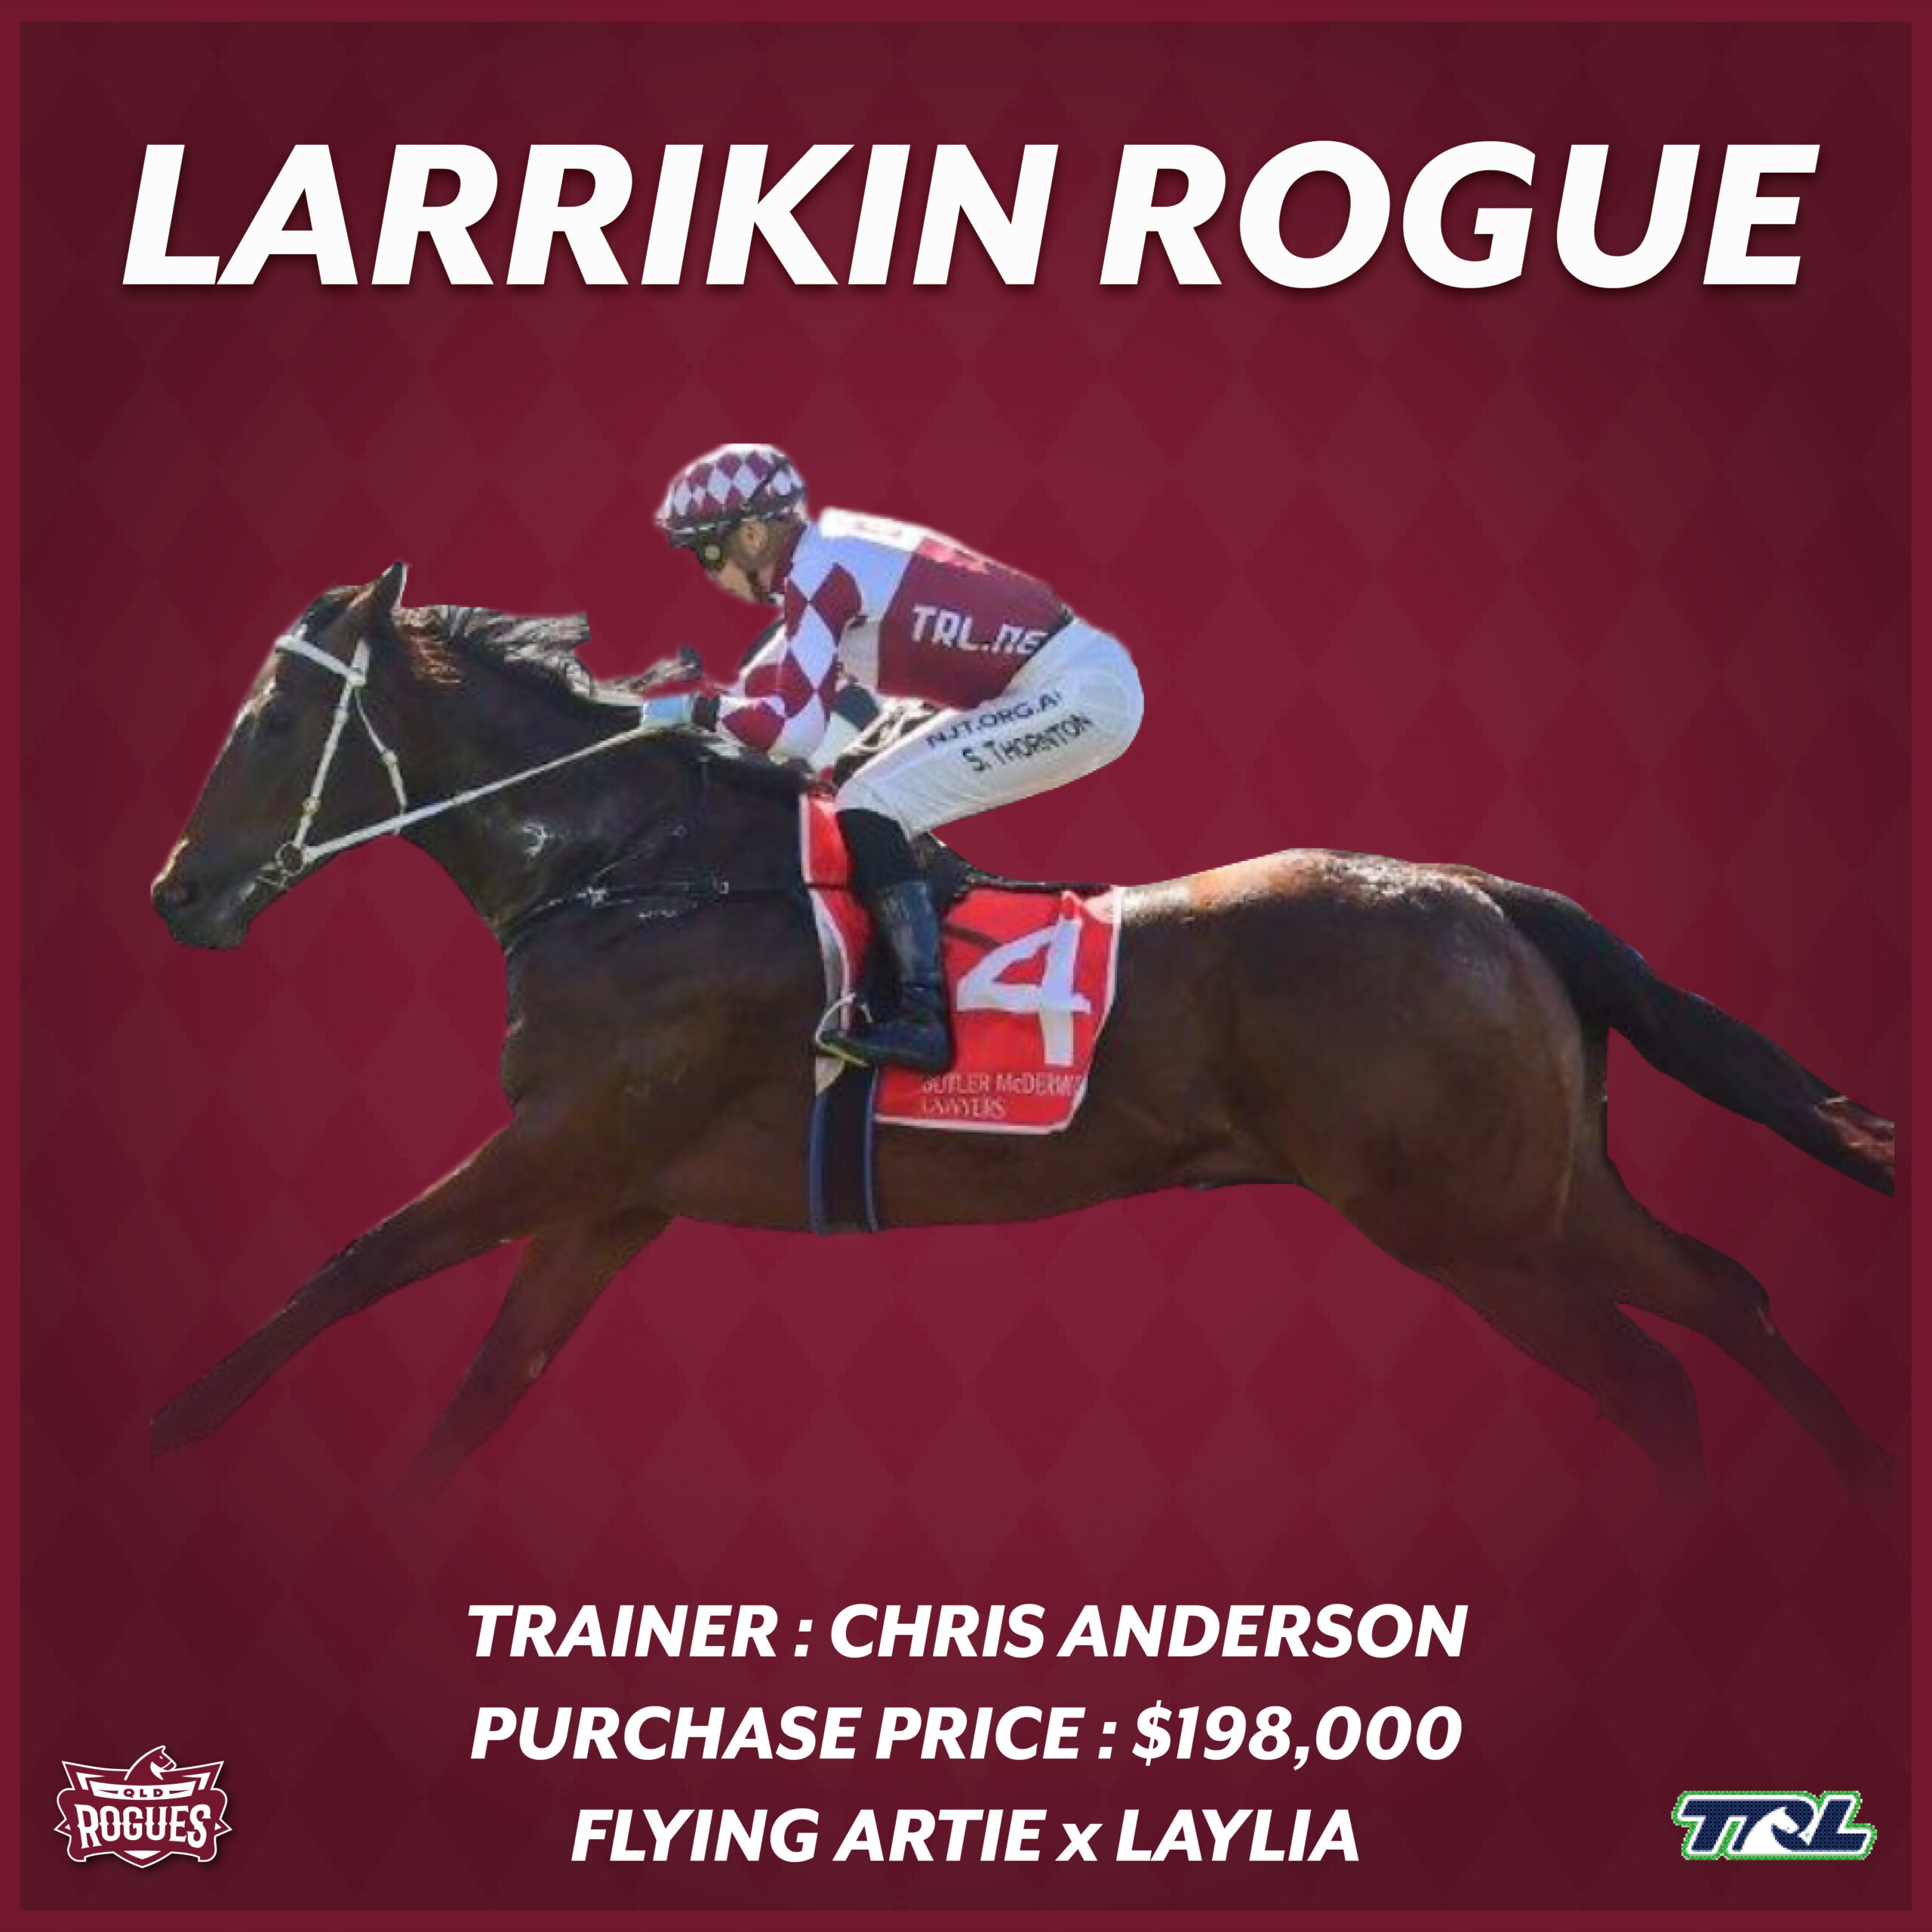 Larrikin Rogue racehorse